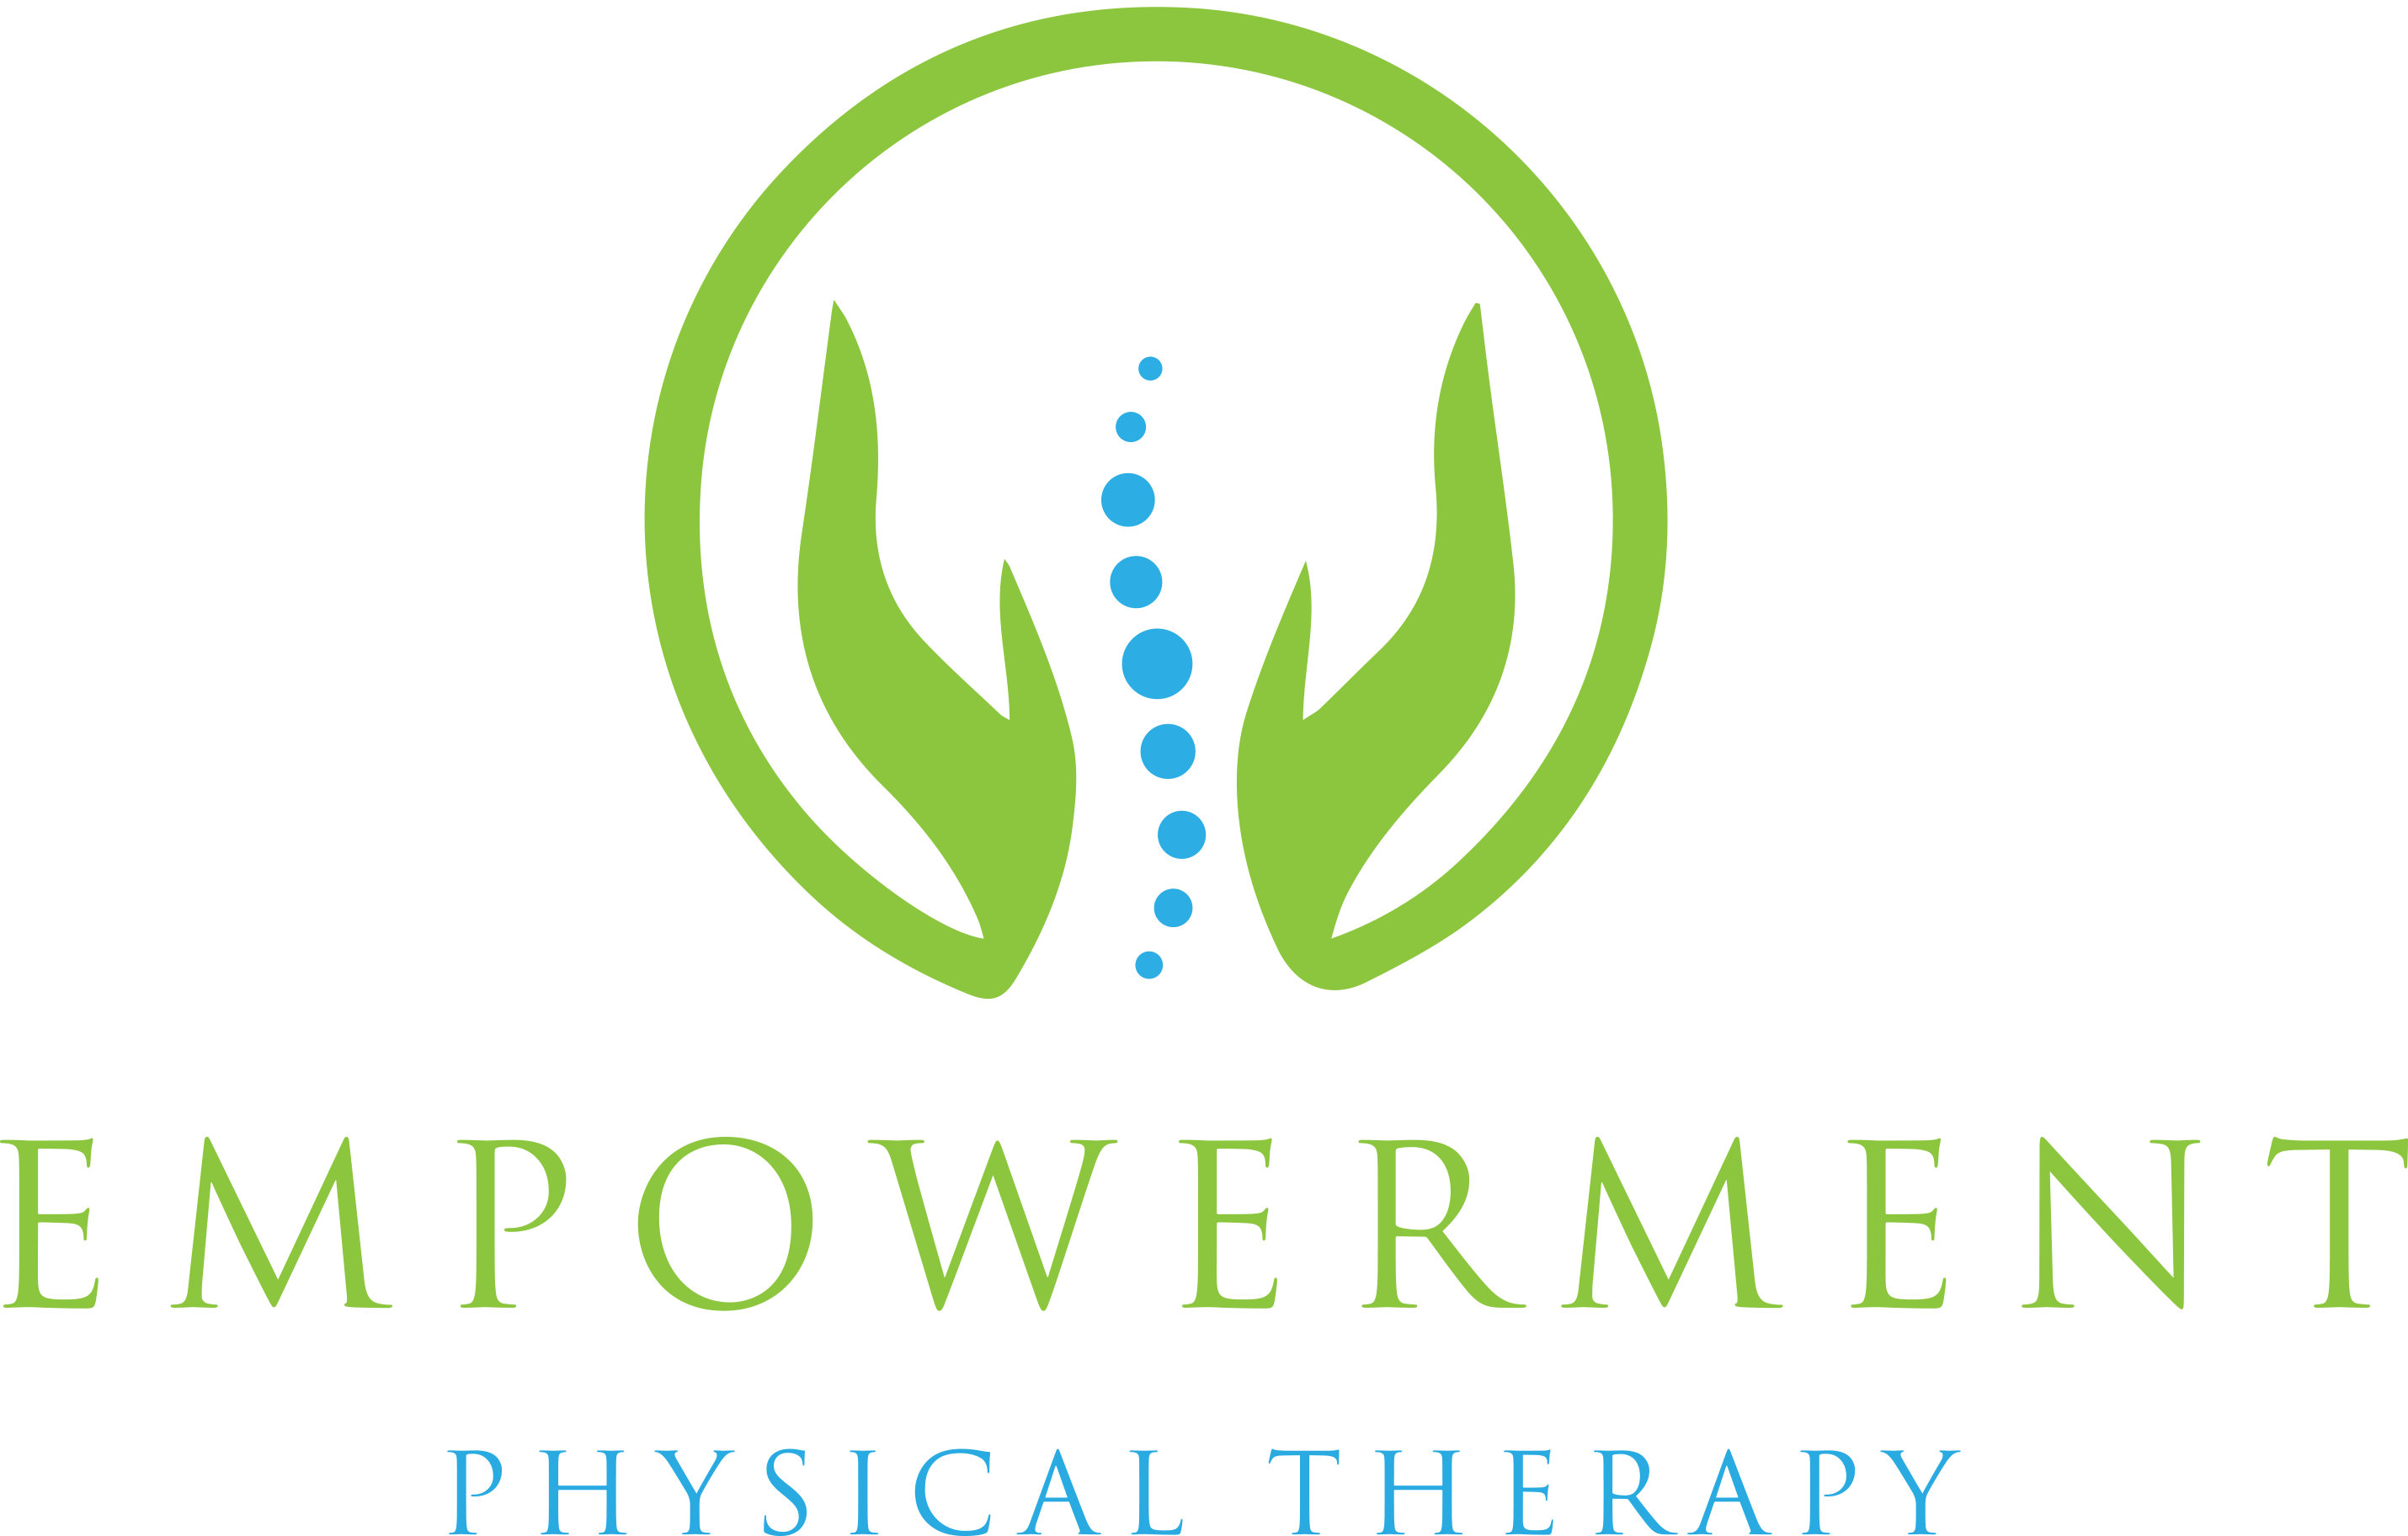 Empowerment Logo - Empowerment Physical Therapy - Transparent Empowerment Logo